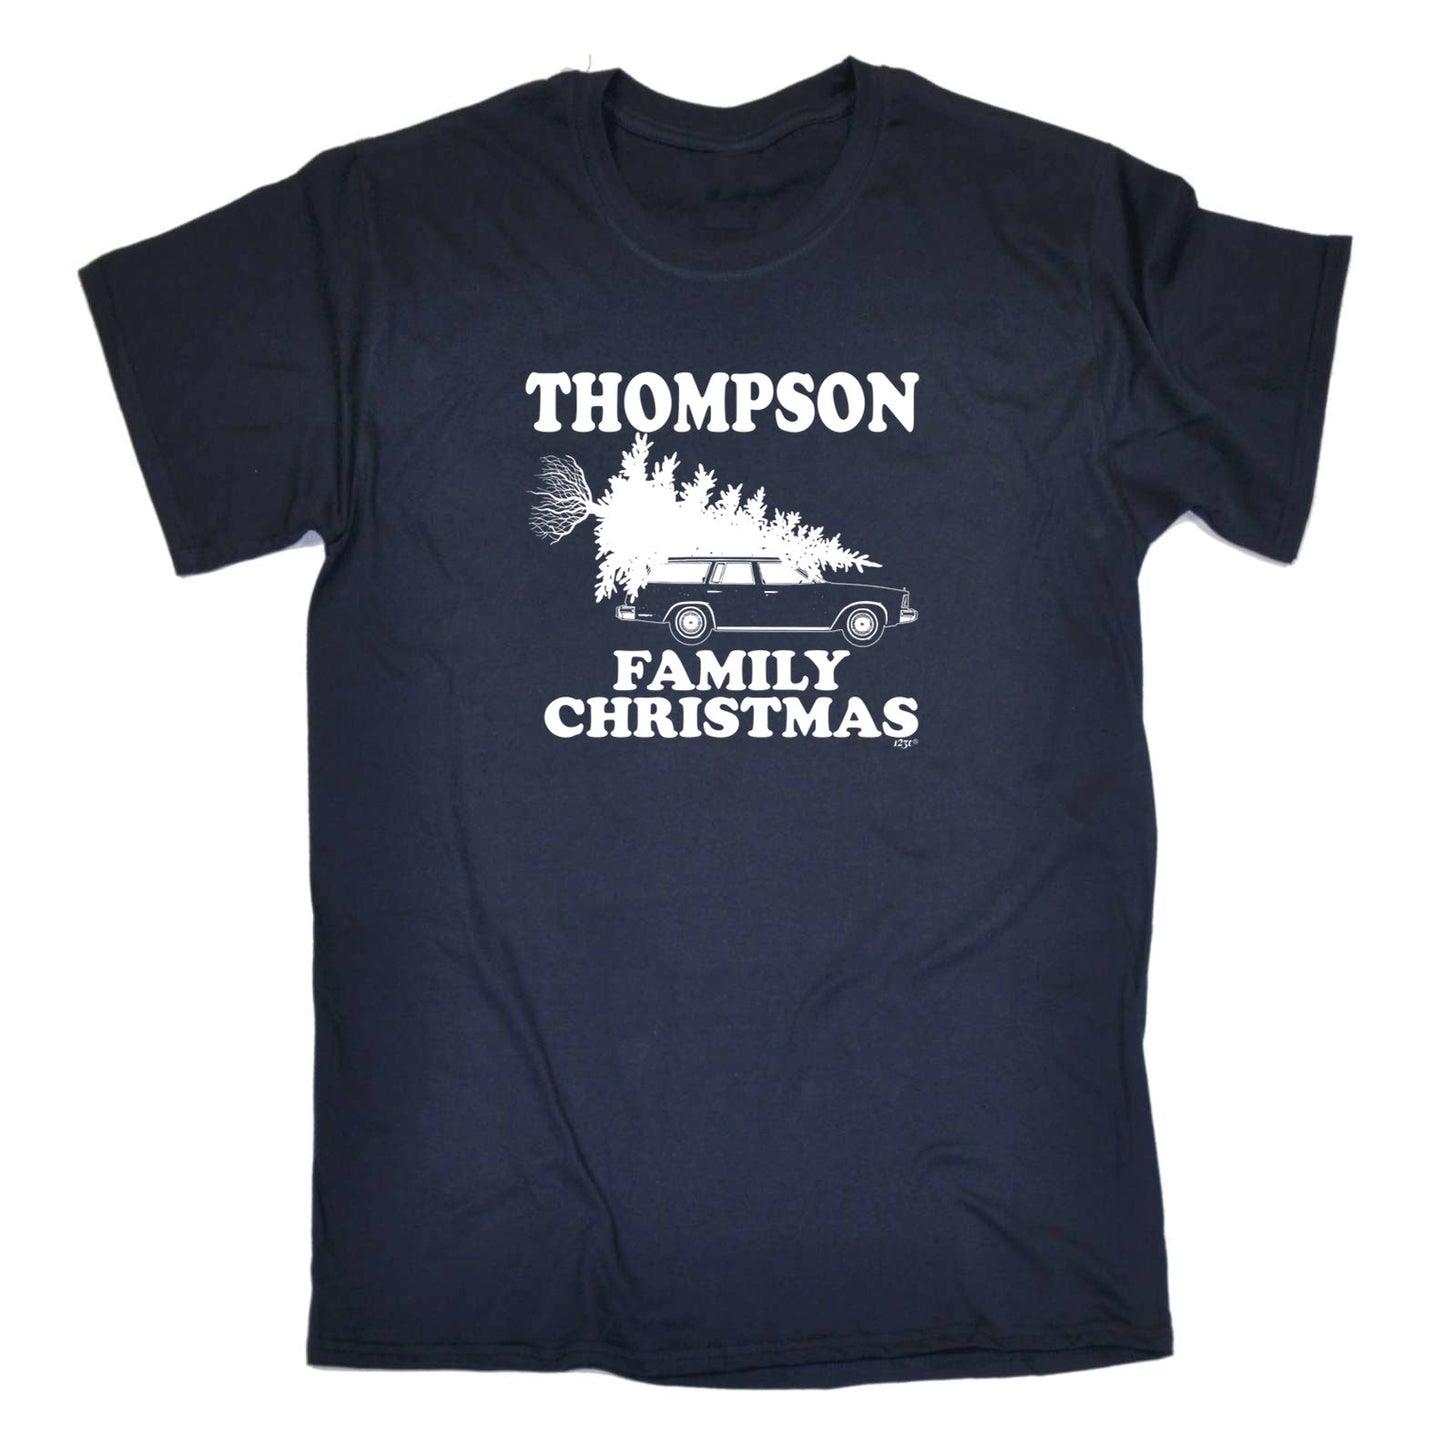 Family Christmas Thompson - Mens Xmas Novelty T-Shirt / T Shirt